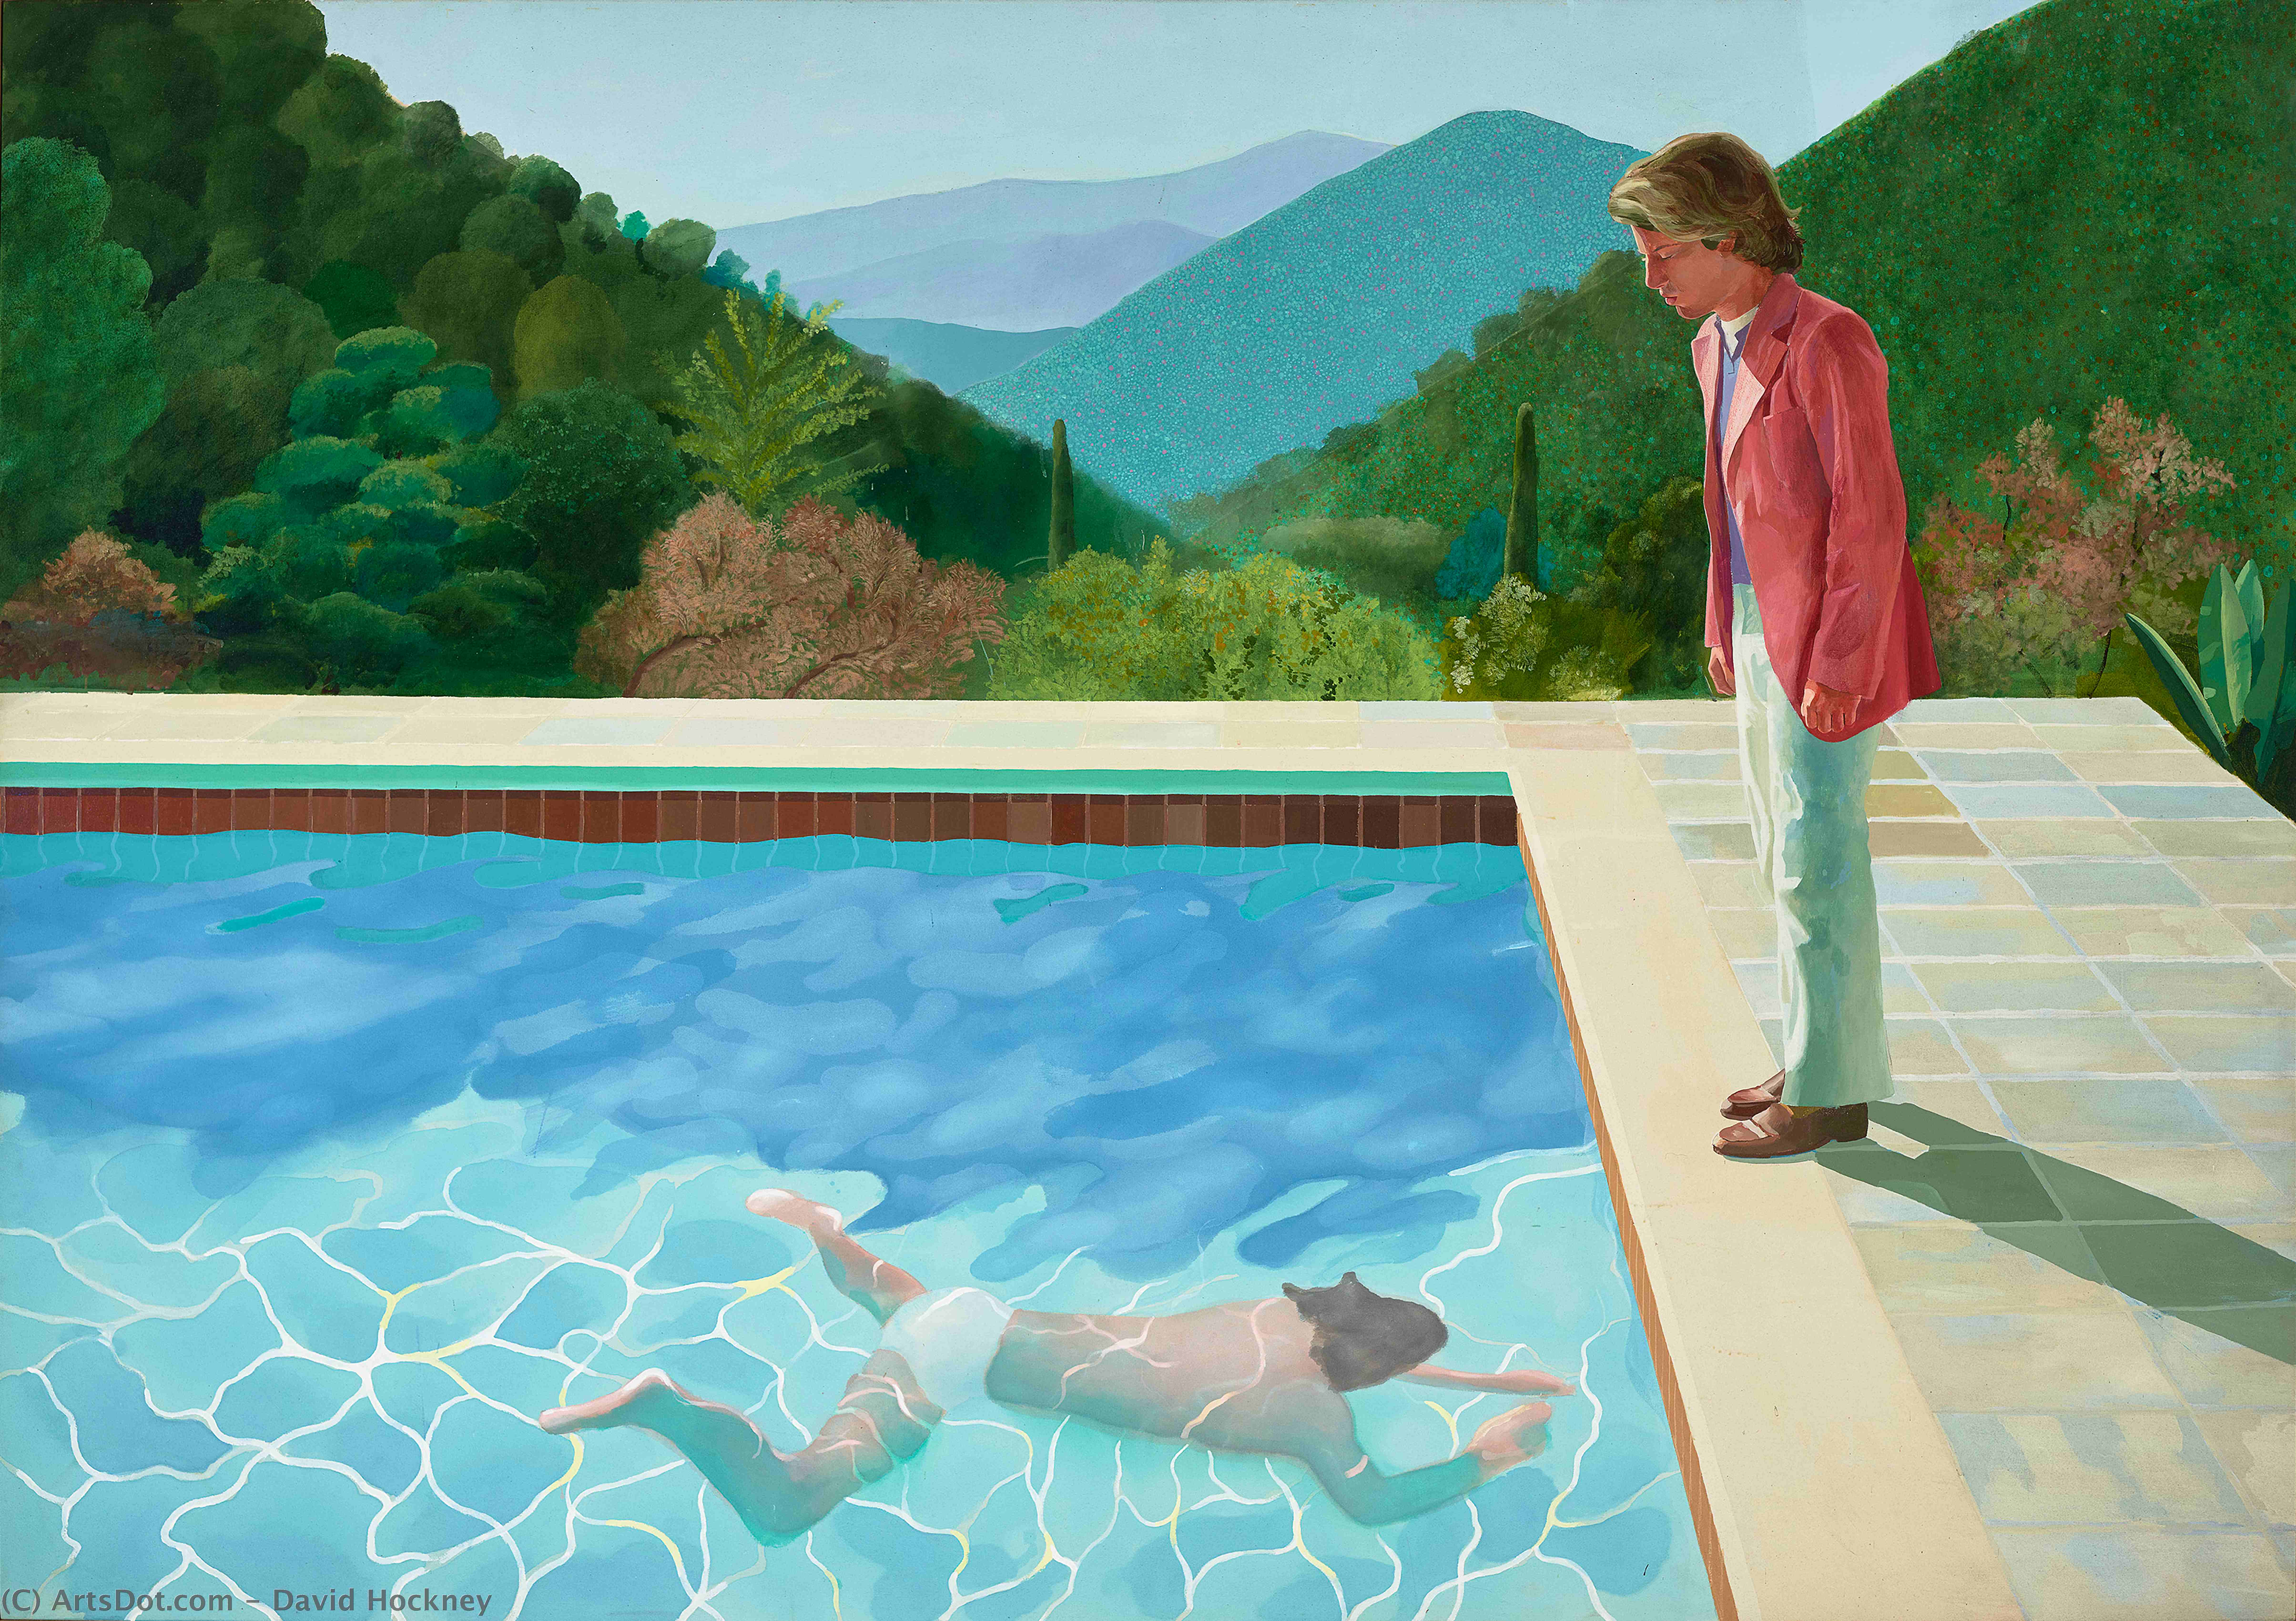 Wikoo.org - موسوعة الفنون الجميلة - اللوحة، العمل الفني David Hockney - Portrait of an artist pool with two figures